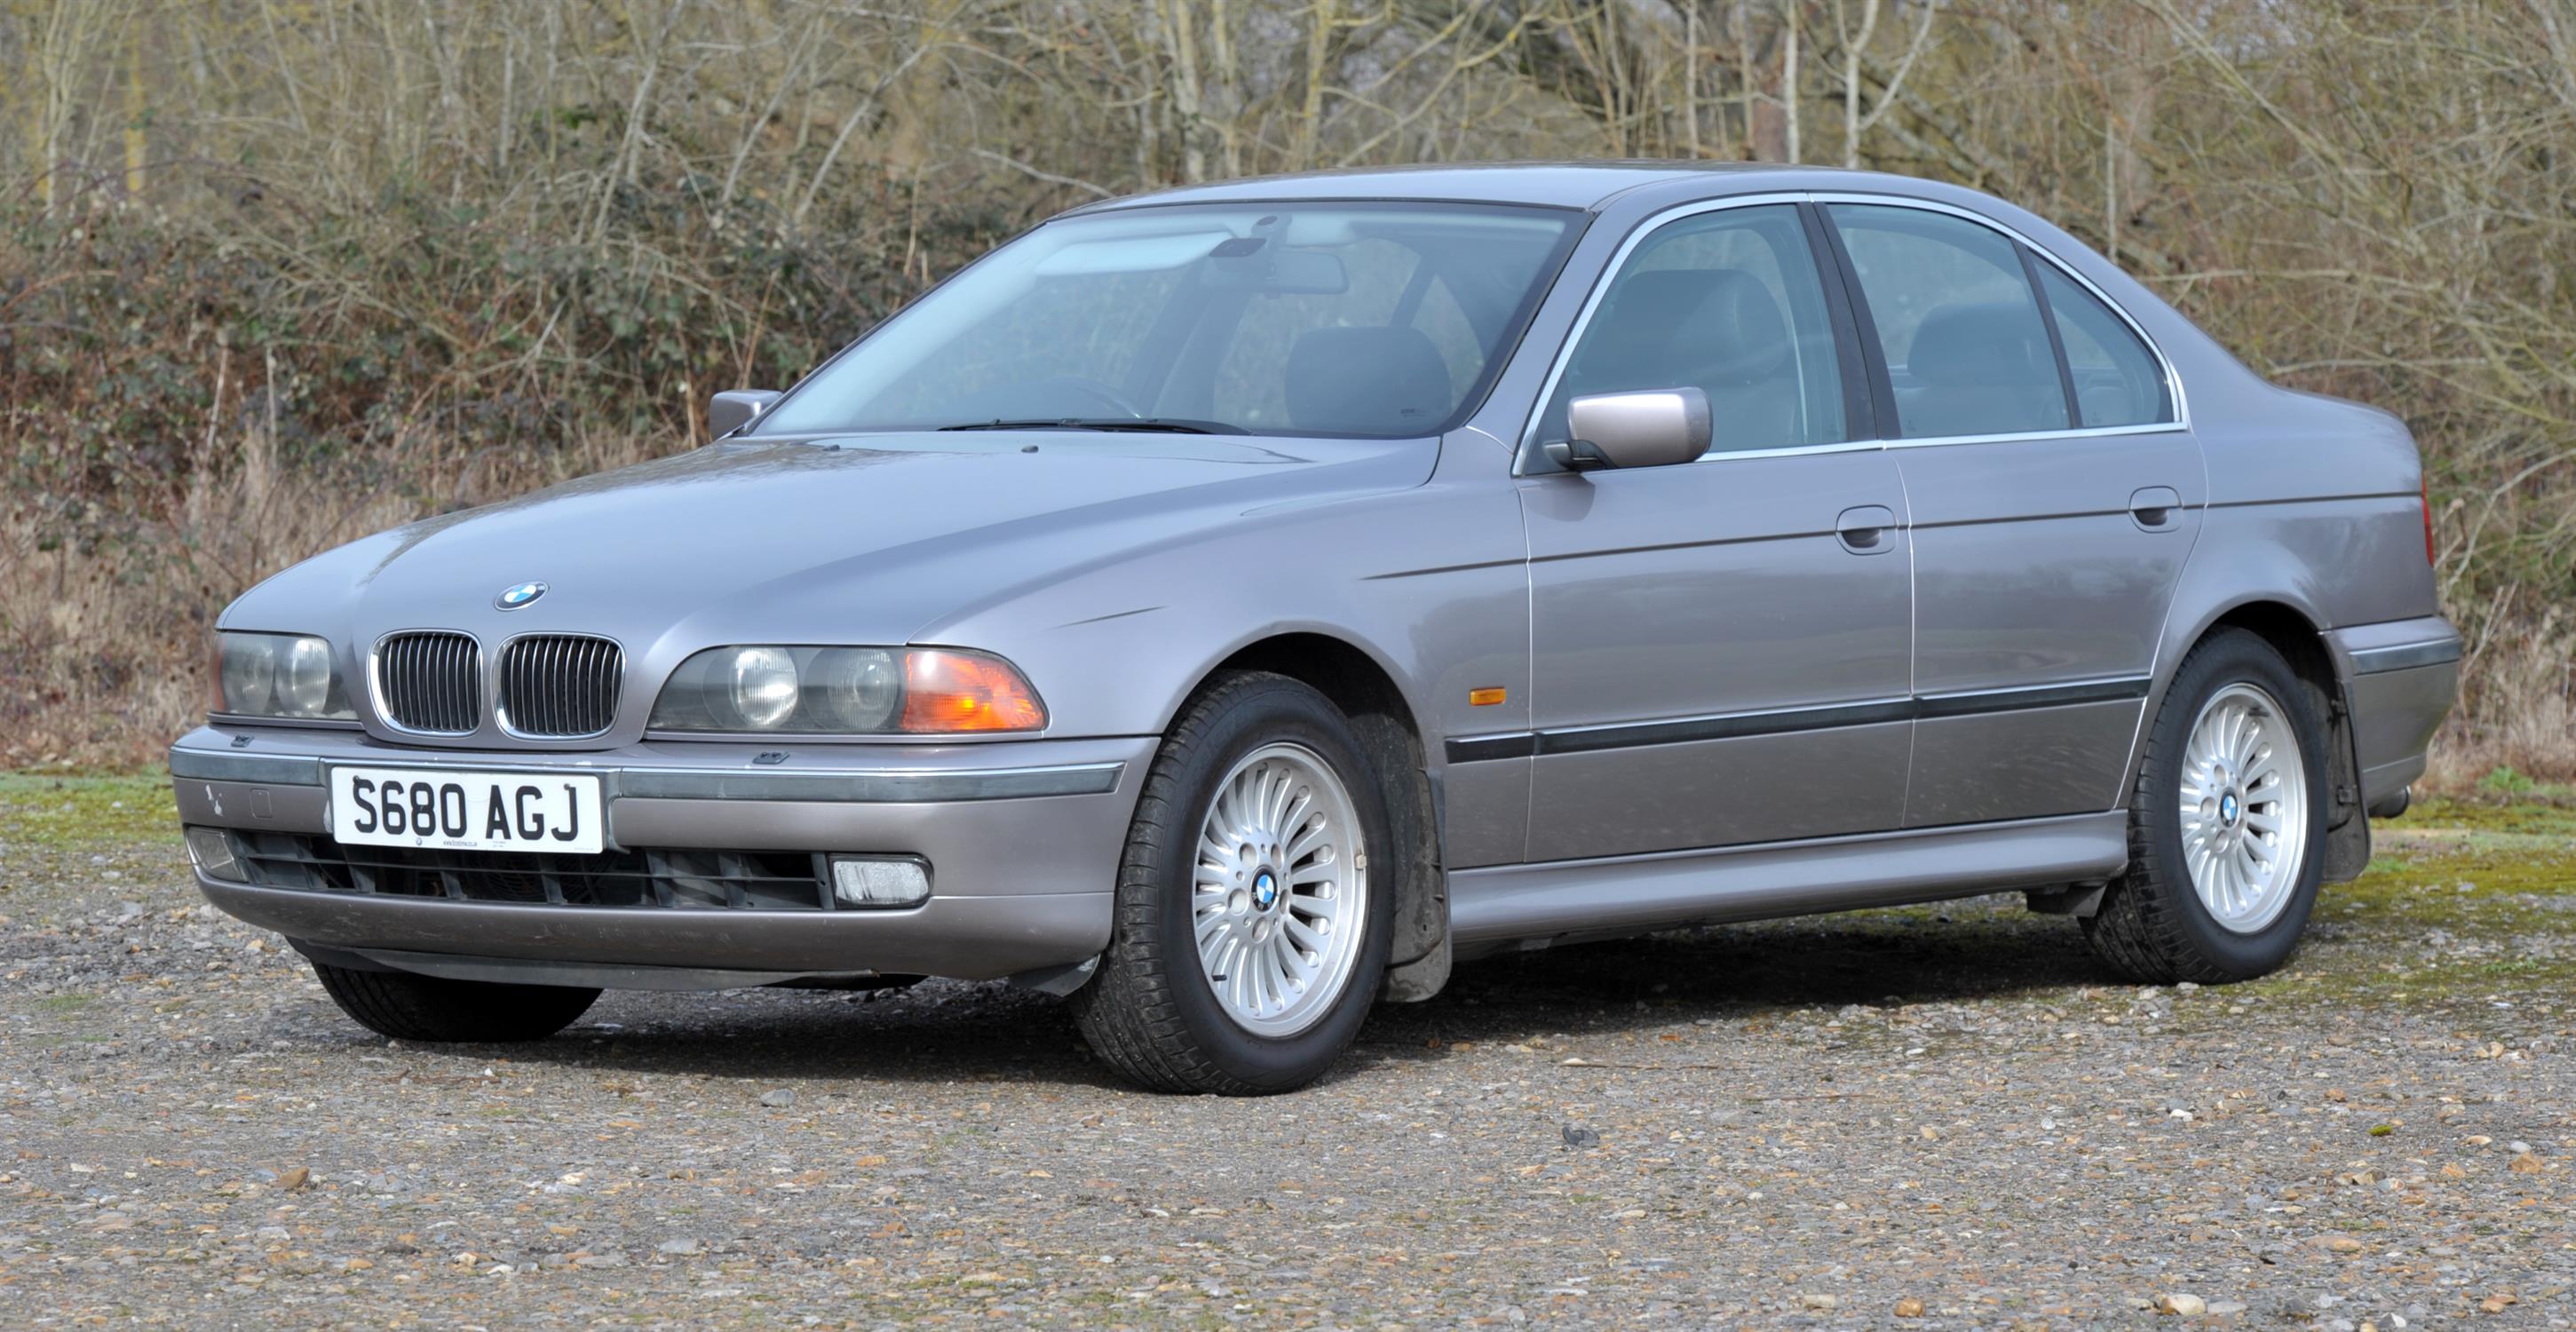 1998 BMW 535i SE Petrol Automatic saloon. Registration number: S680 AGJ. Mileage: 95, - Image 4 of 15